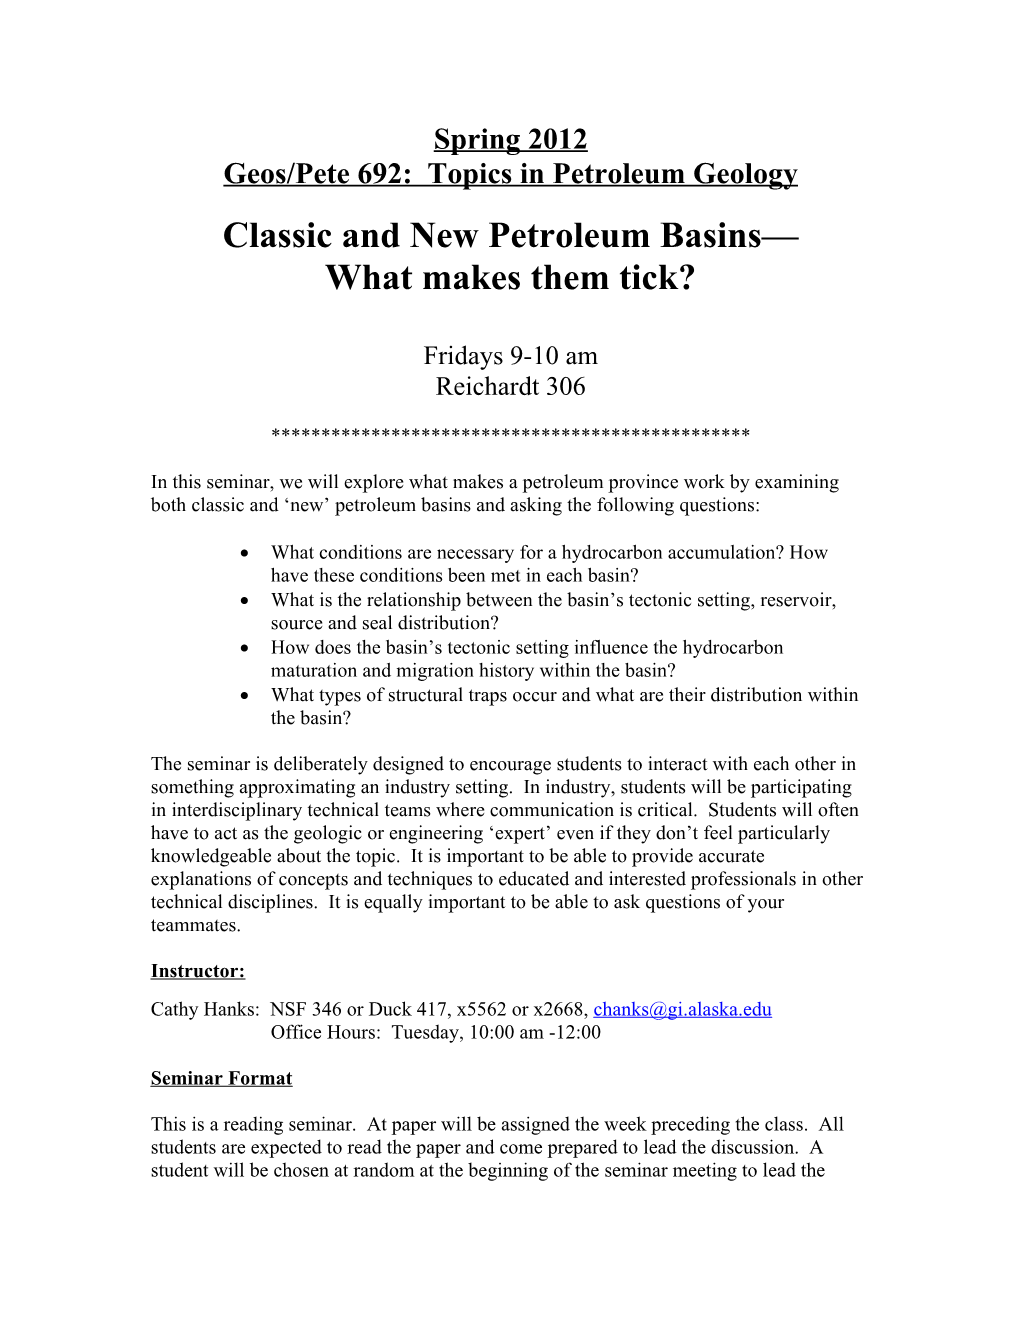 Geos/Pete 692: Topics in Petroleum Geology